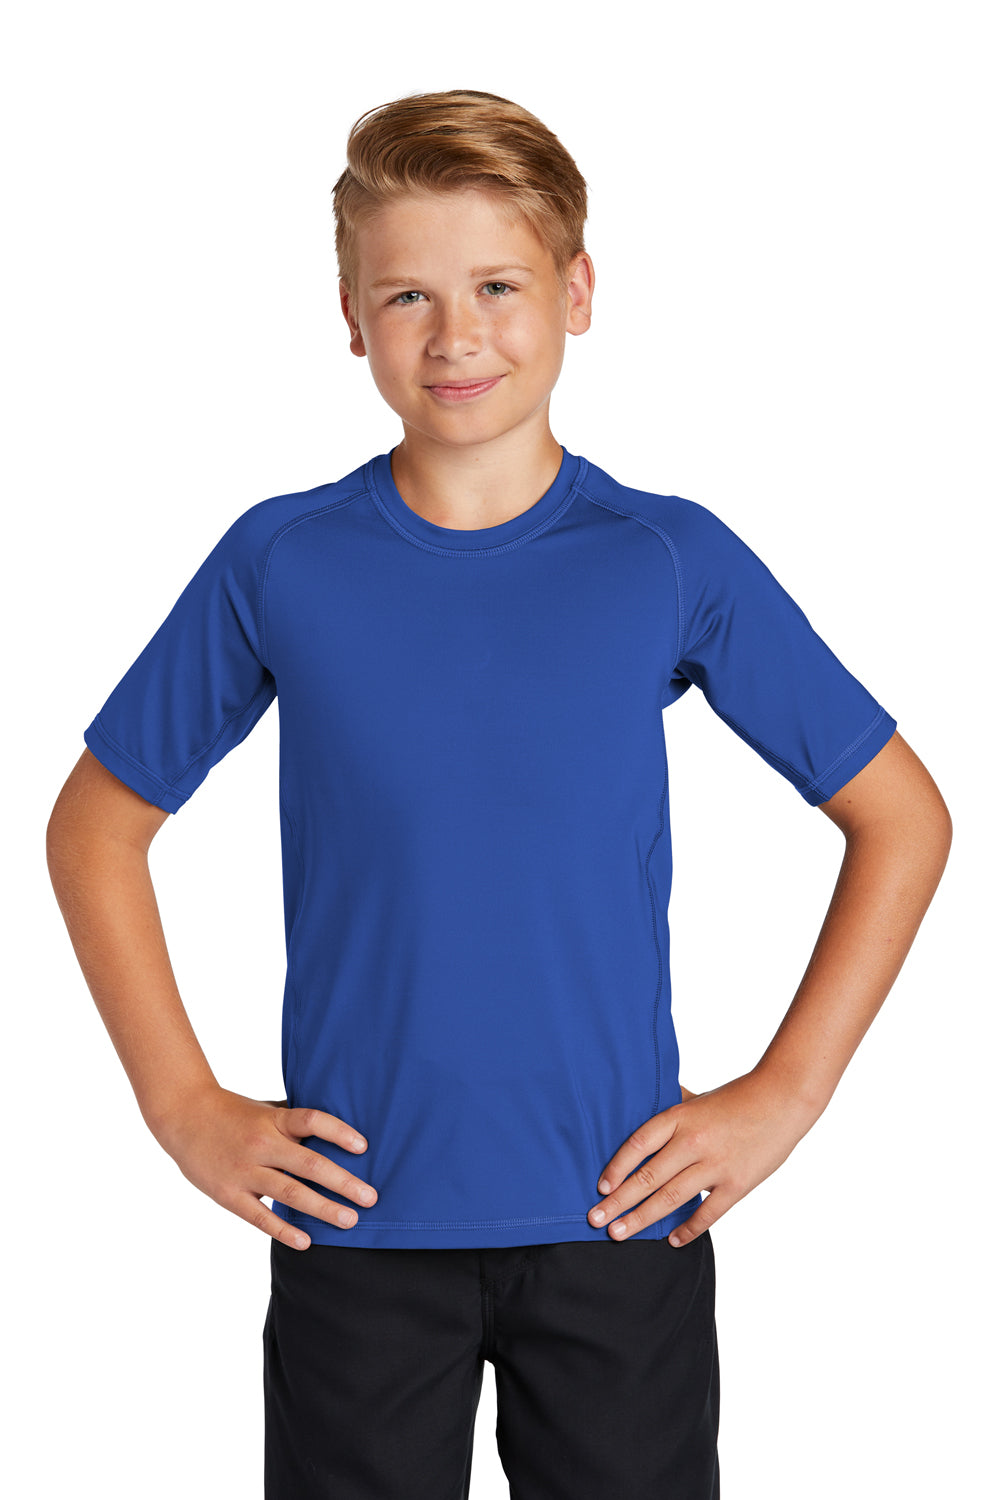 Sport-Tek Youth Rashguard Short Sleeve Crewneck T-Shirt True Royal Blue Front